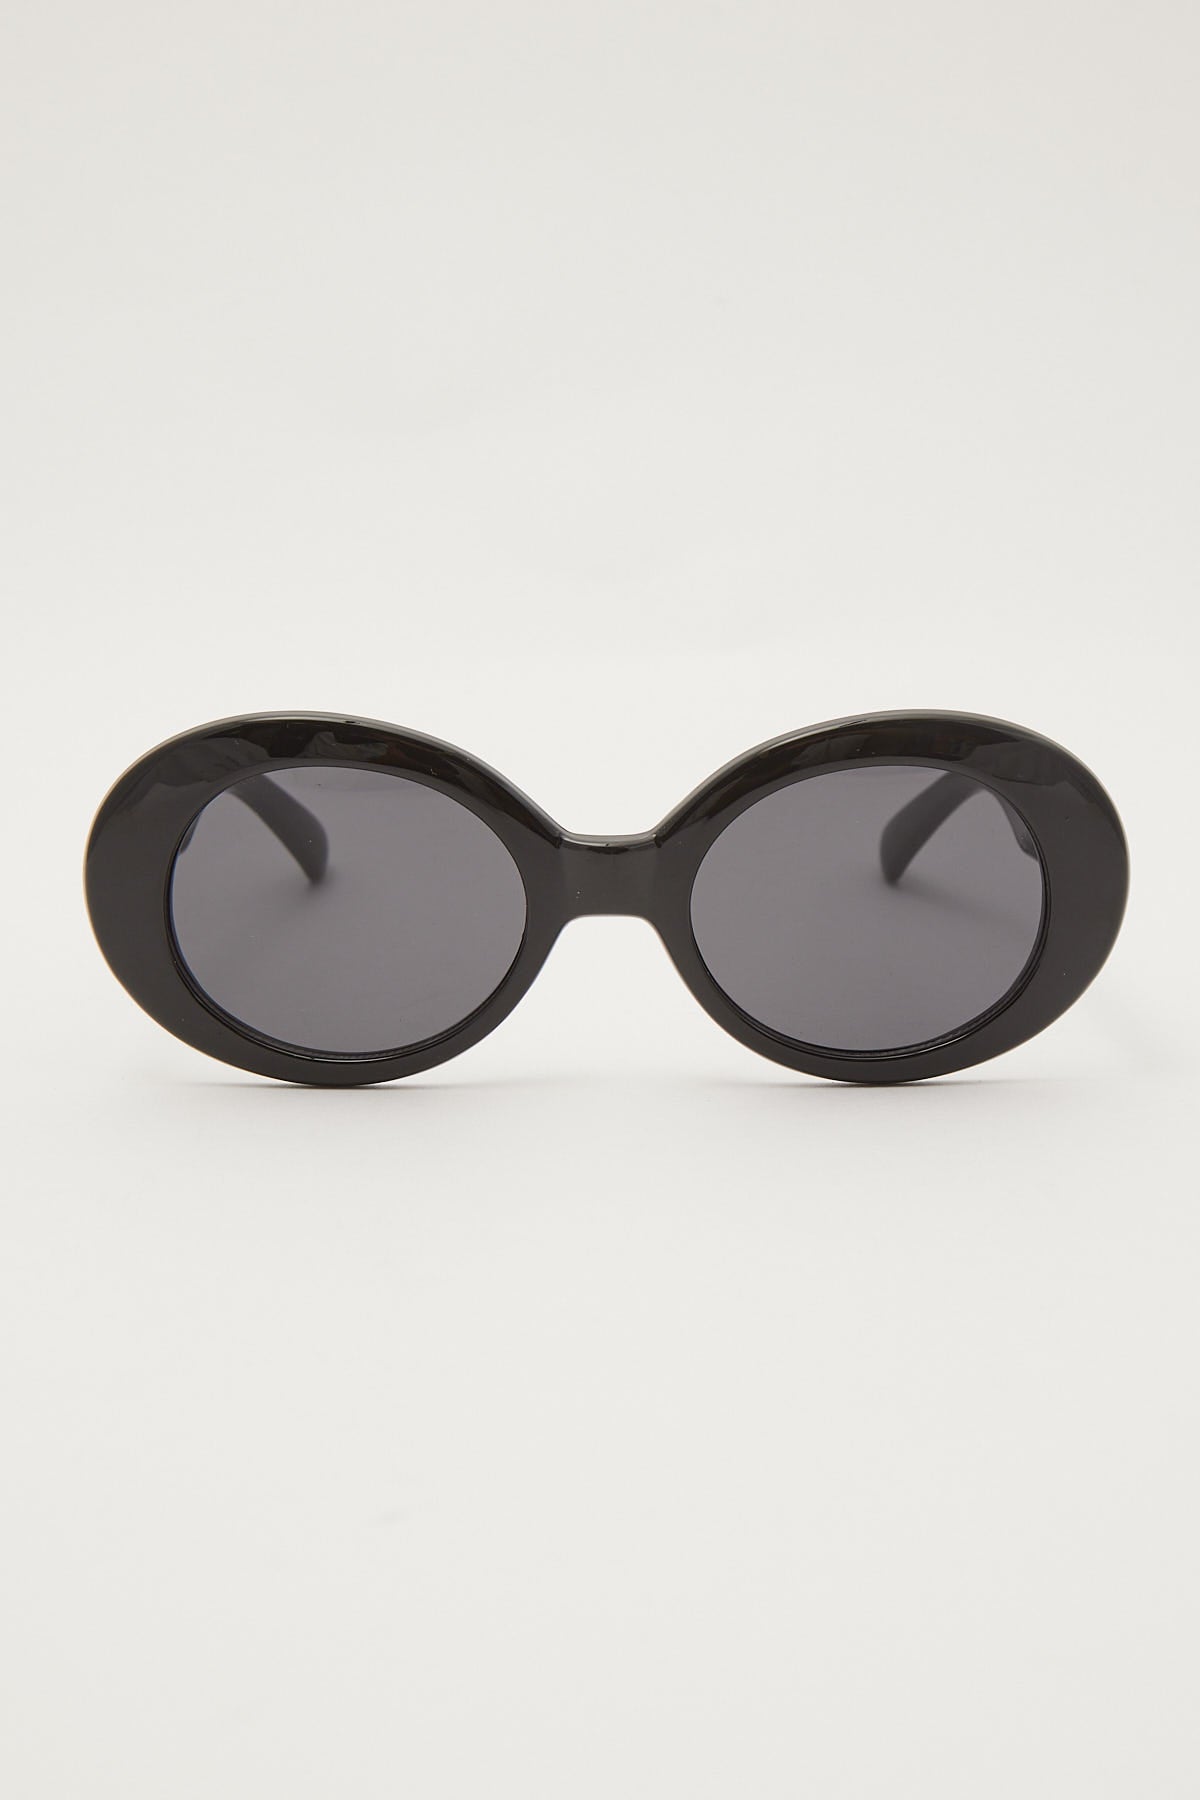 Vintage Sunglasses Chains - The Vic Version